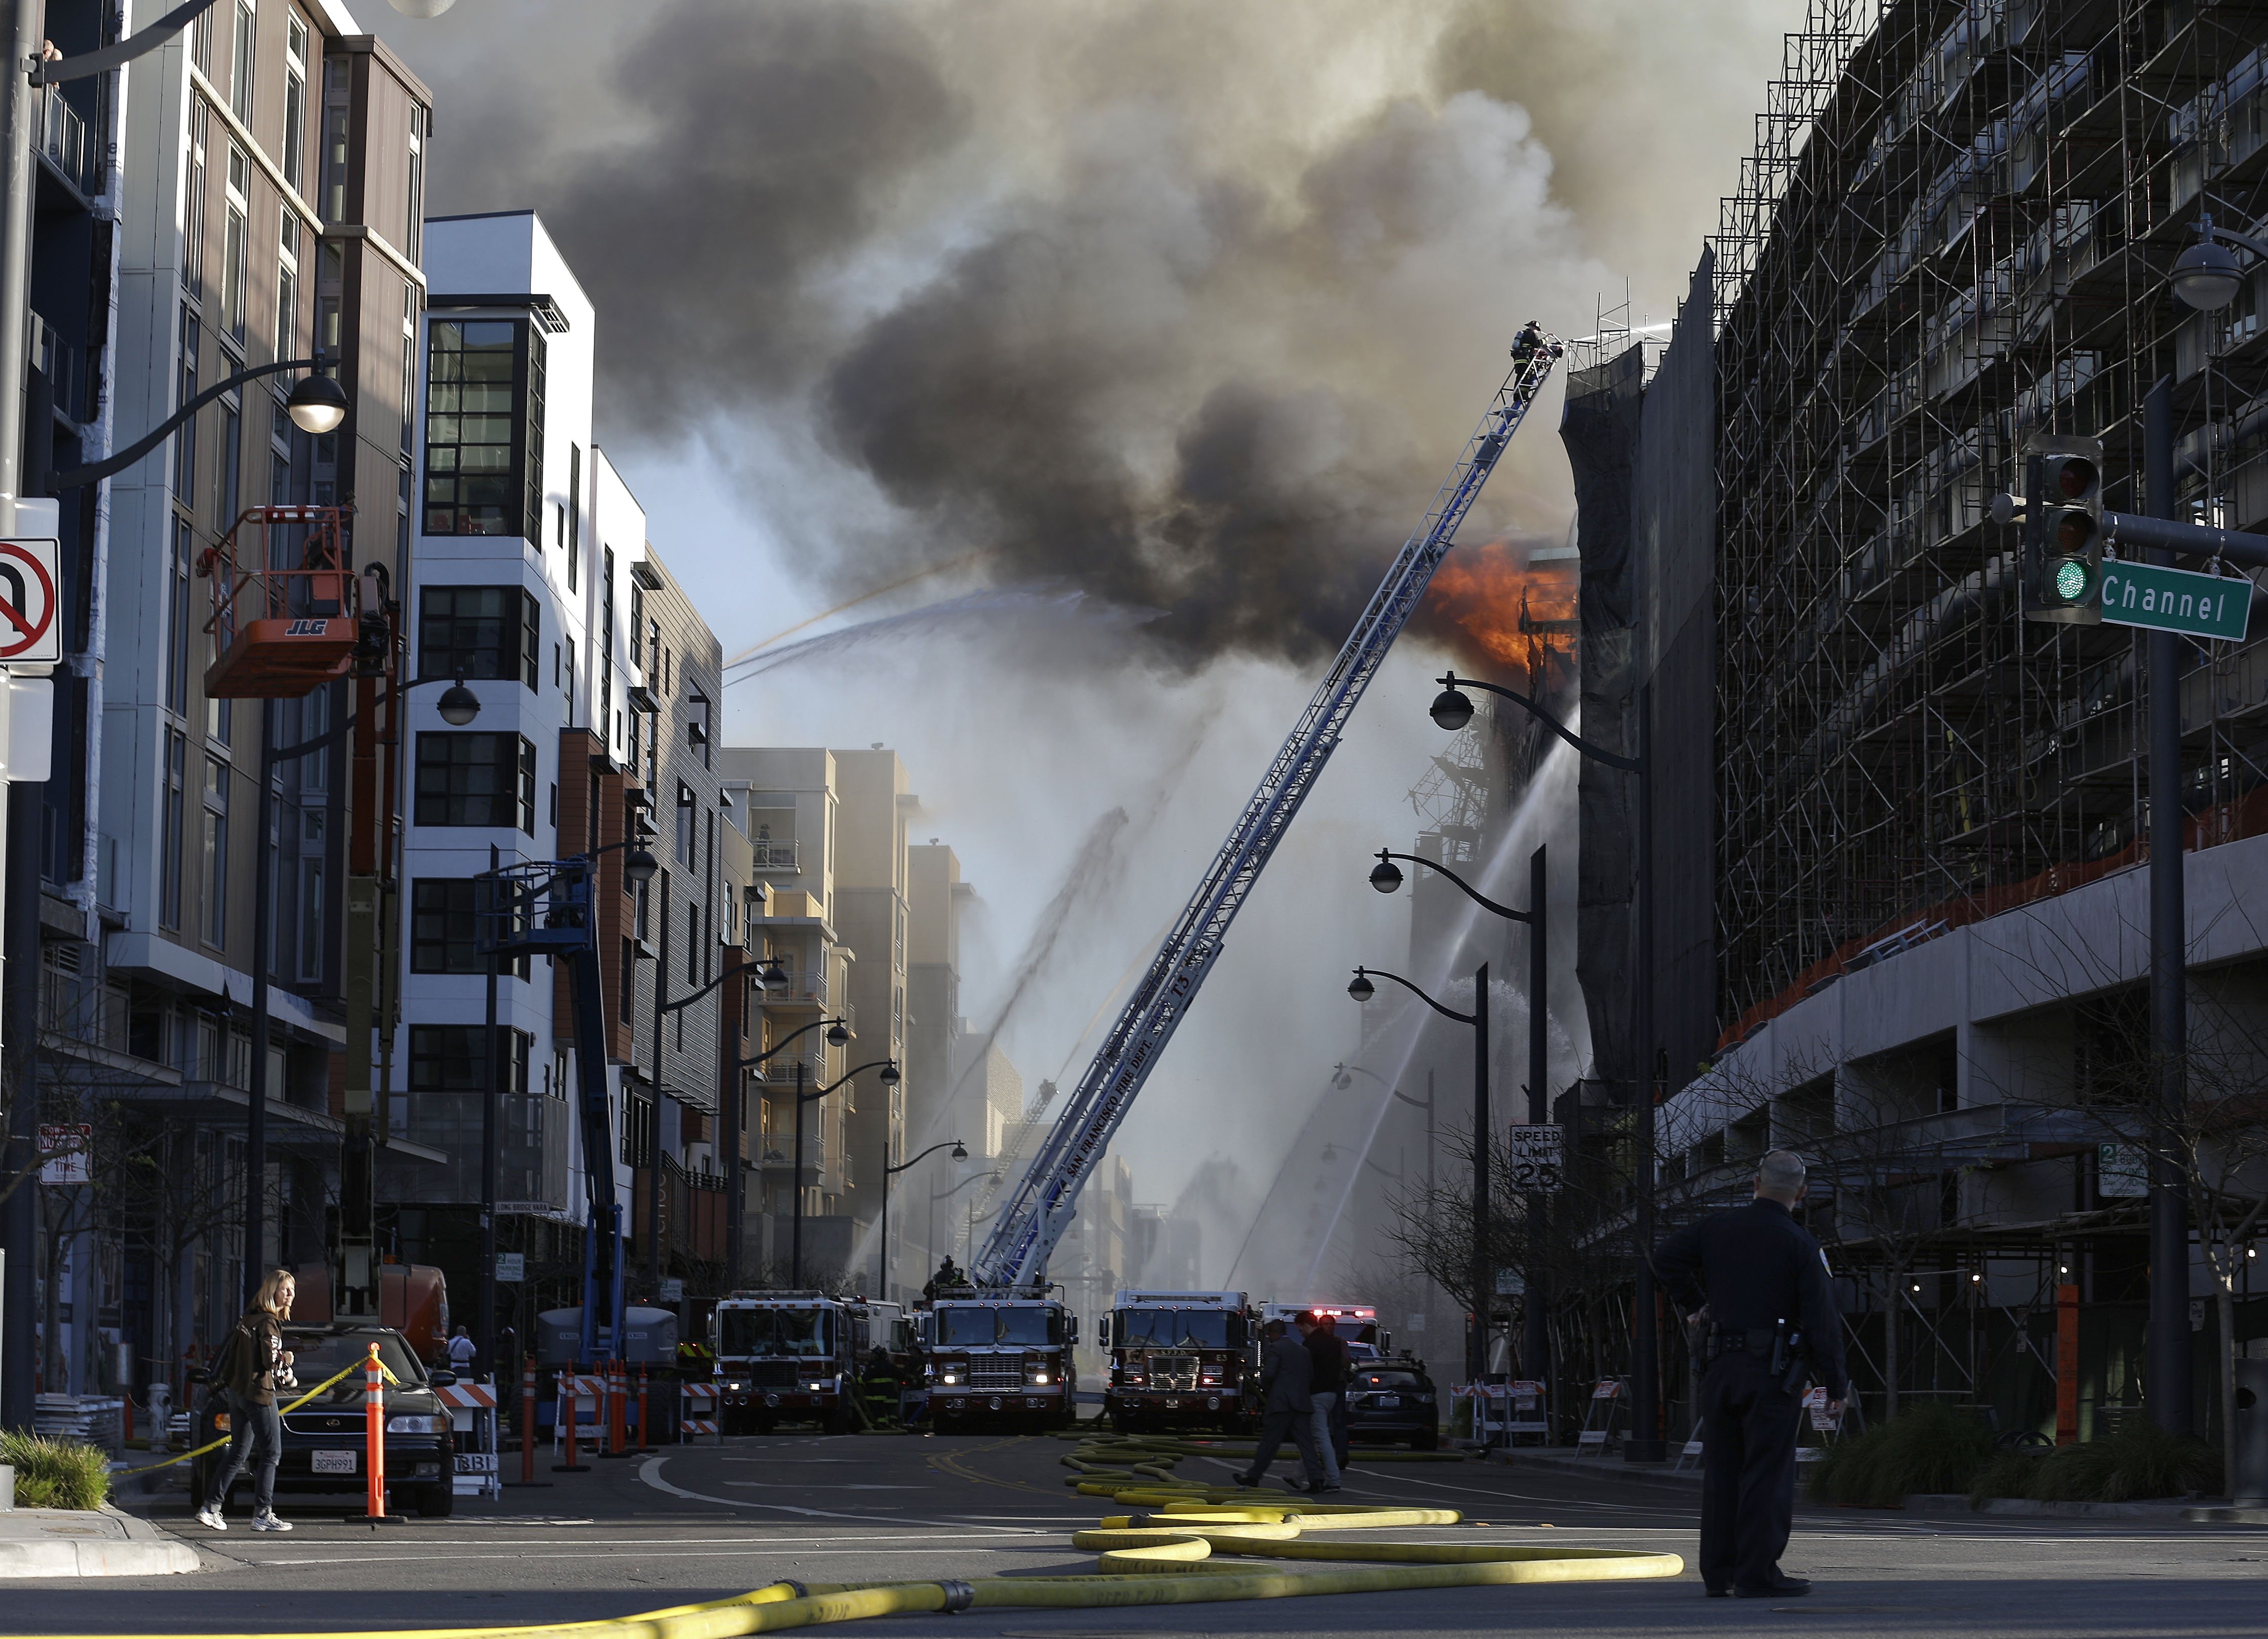 Firefighters battle a fire burning in San Francisco